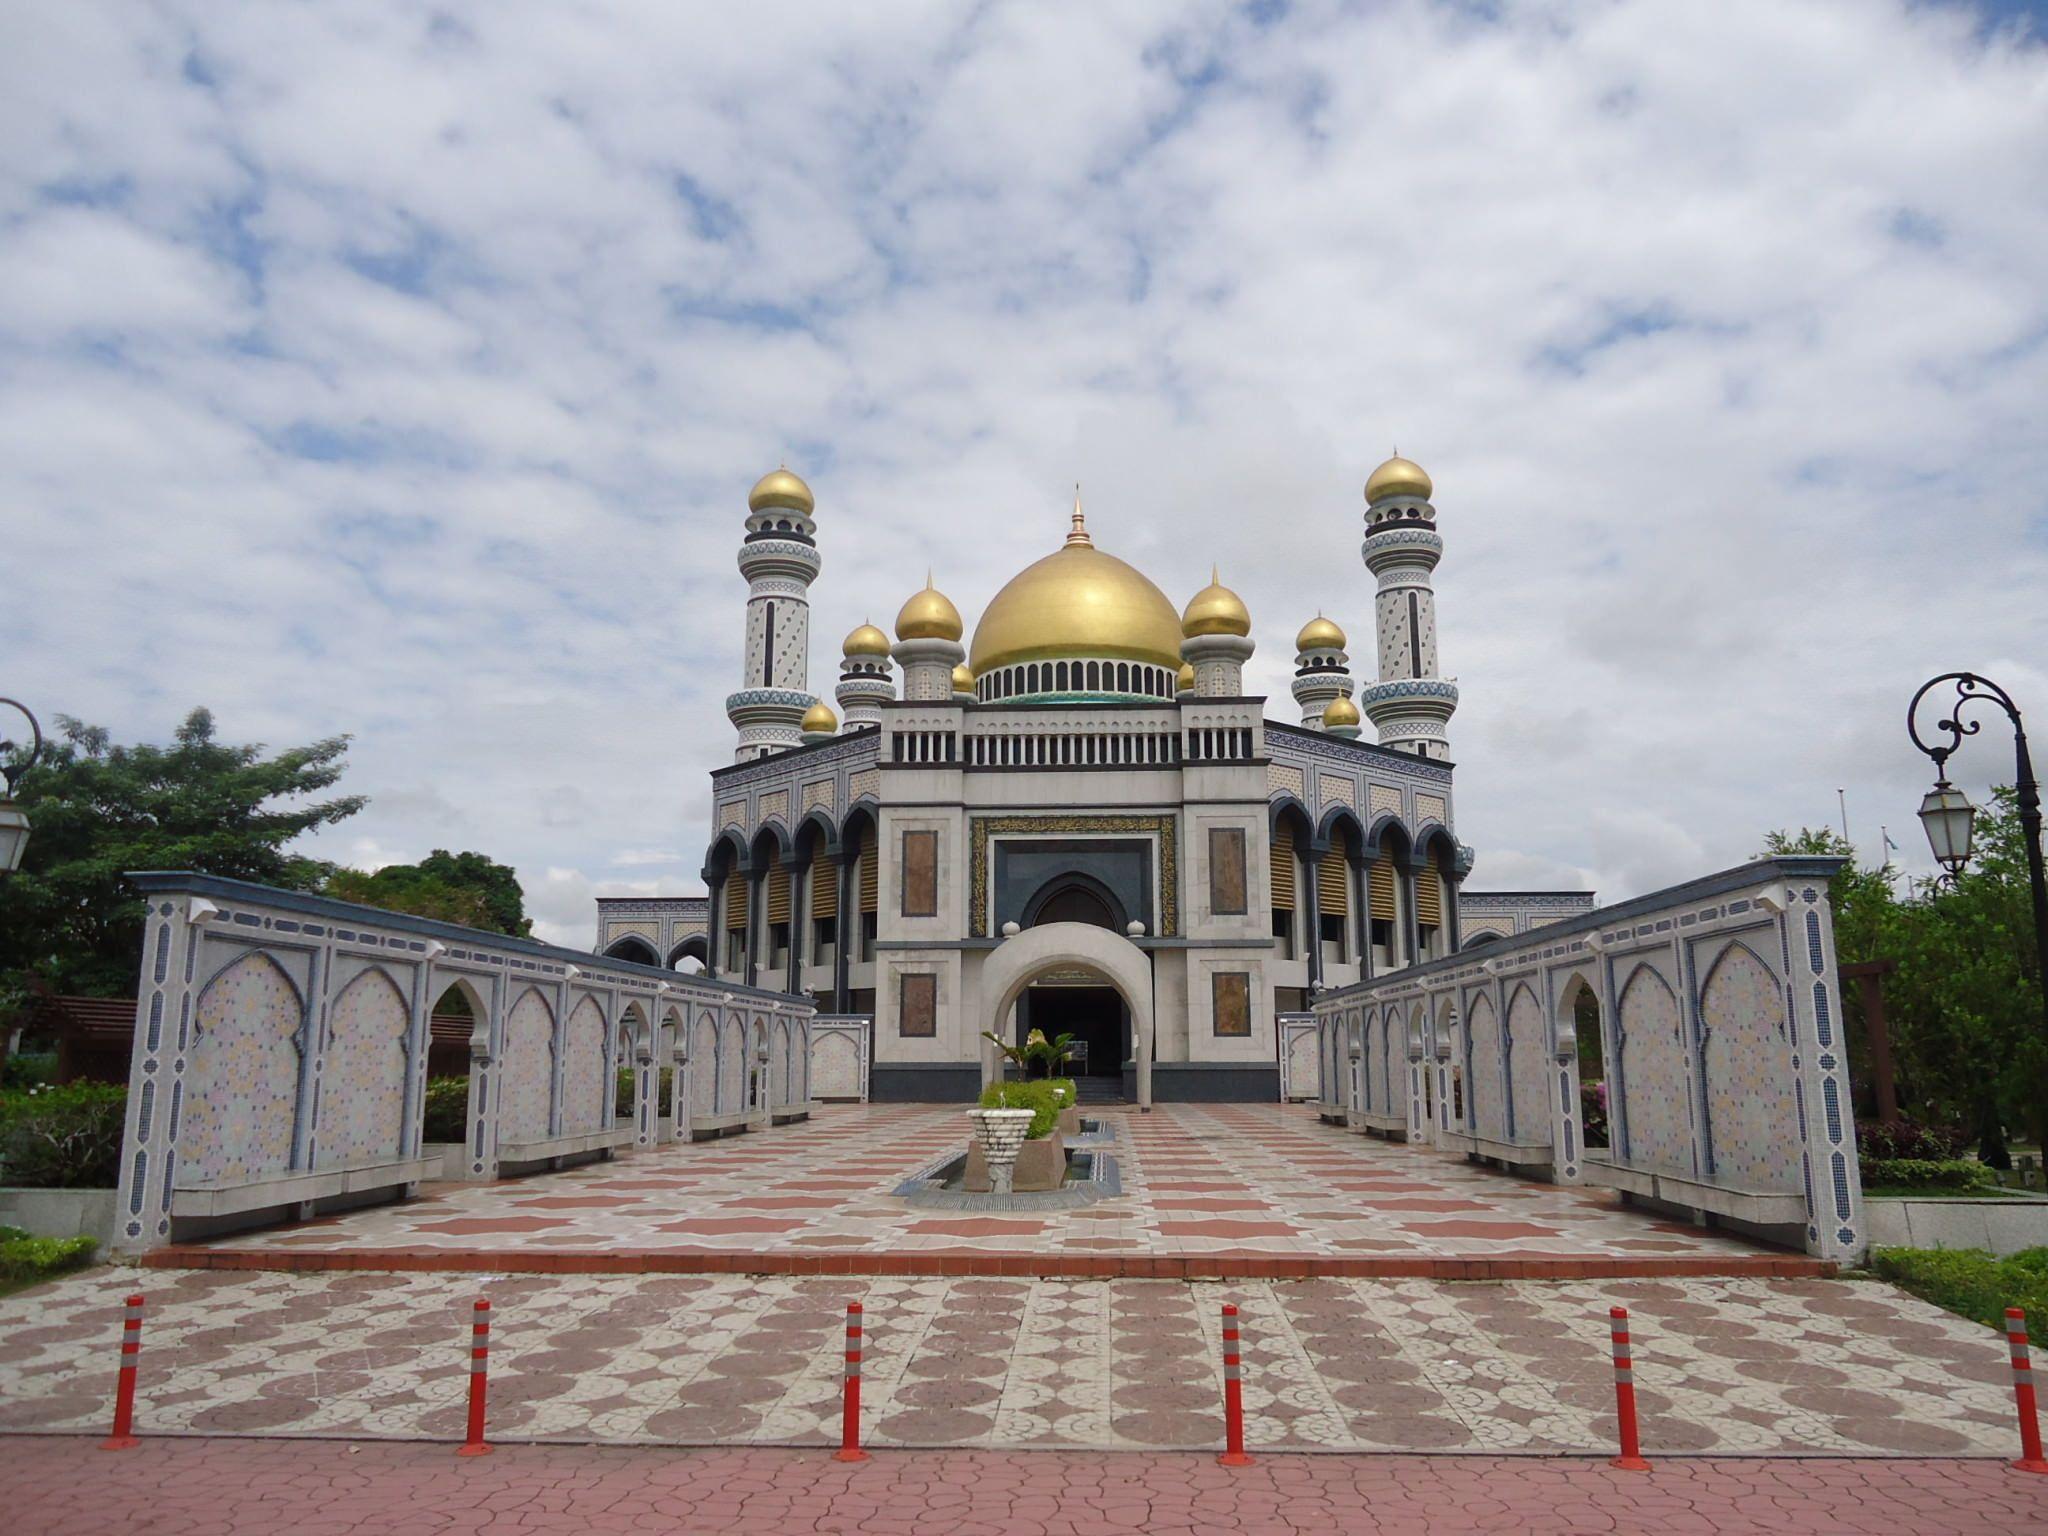 Visiting the Jame Asr Hassanil Bolkiah Mosque in Bandar Seri